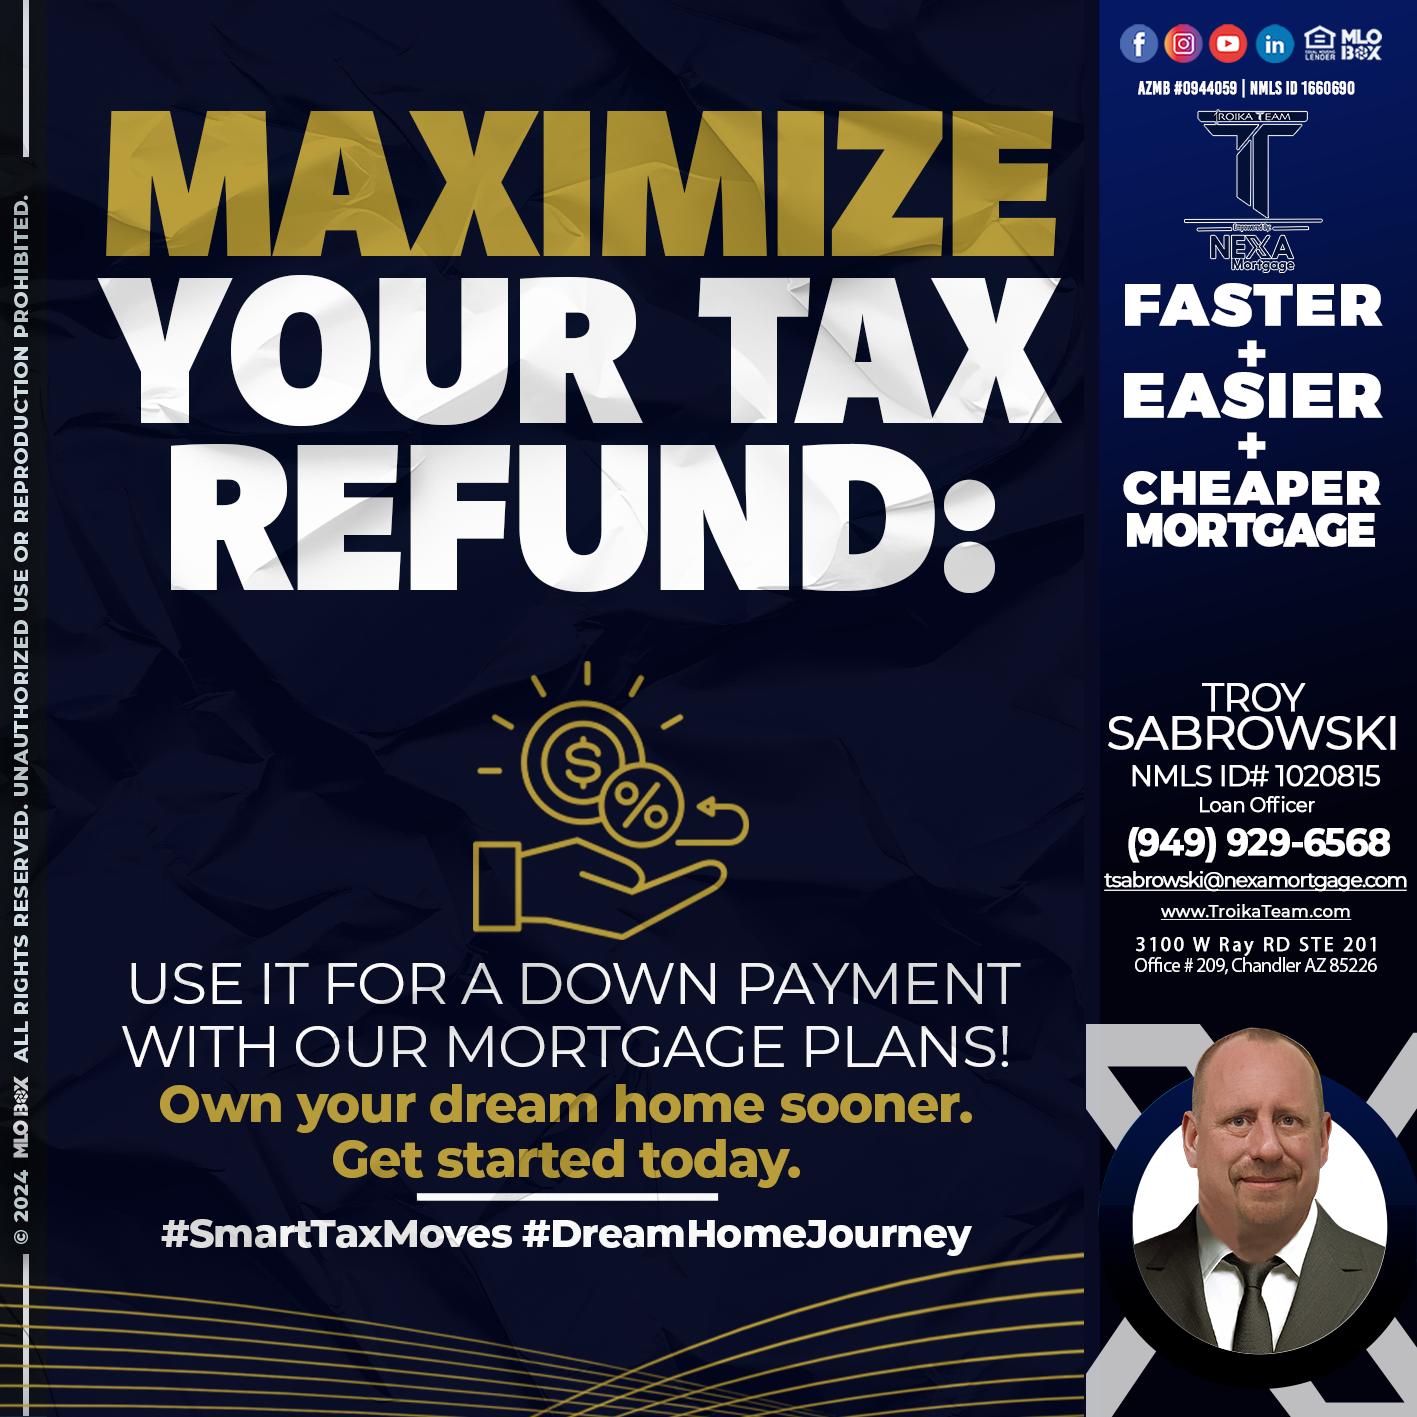 maximize - Troy Sabrowski -Loan Officer